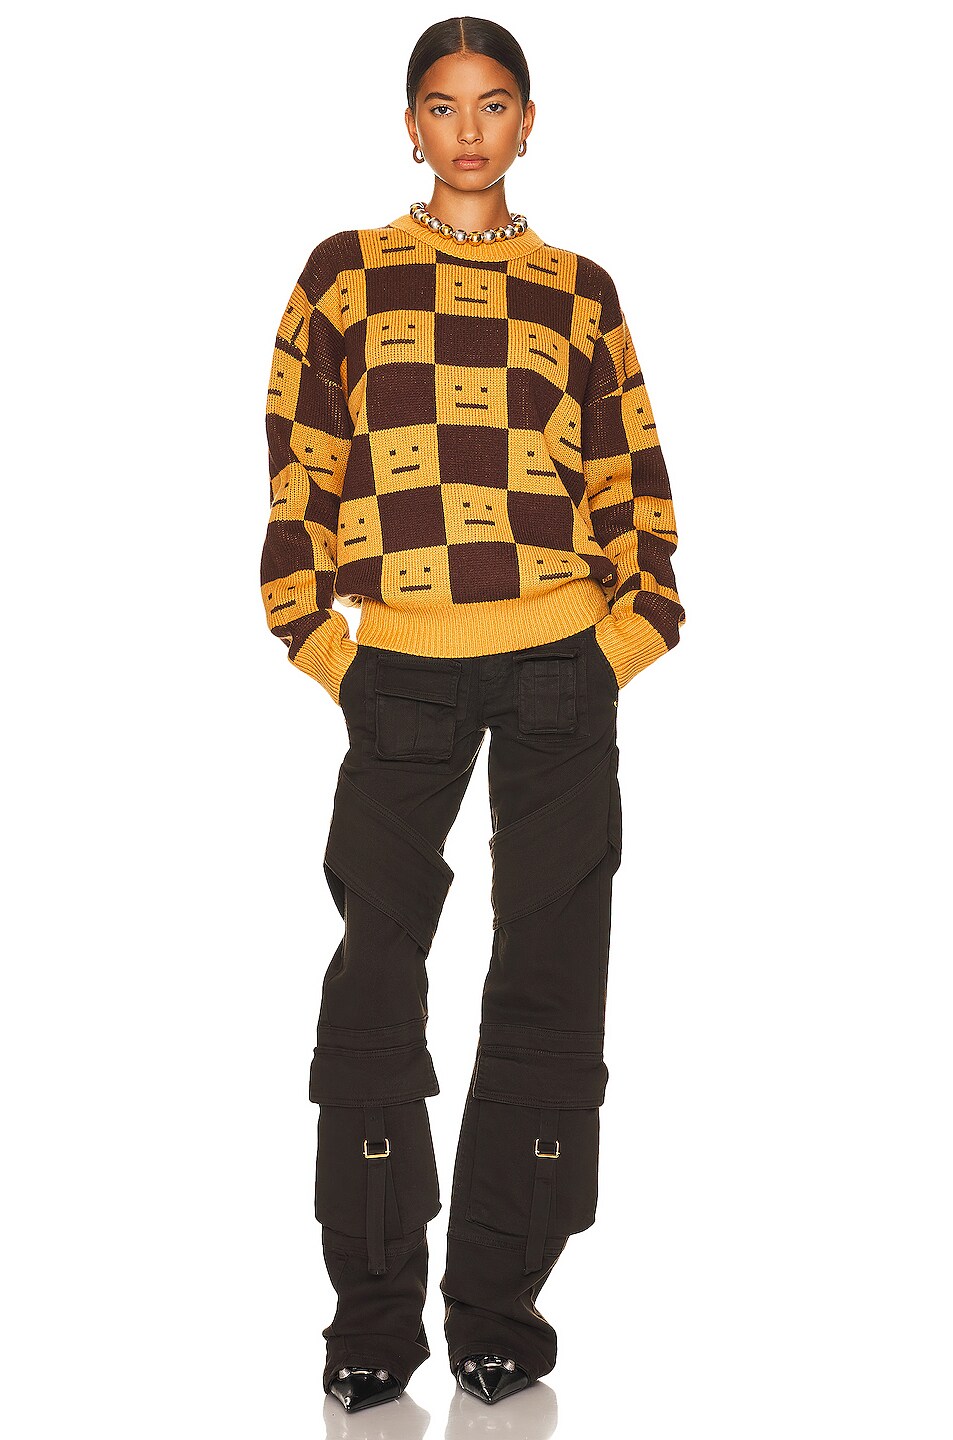 Acne Studios Checkerboard Sweater in Ochre Orange & Coffee Brown | FWRD